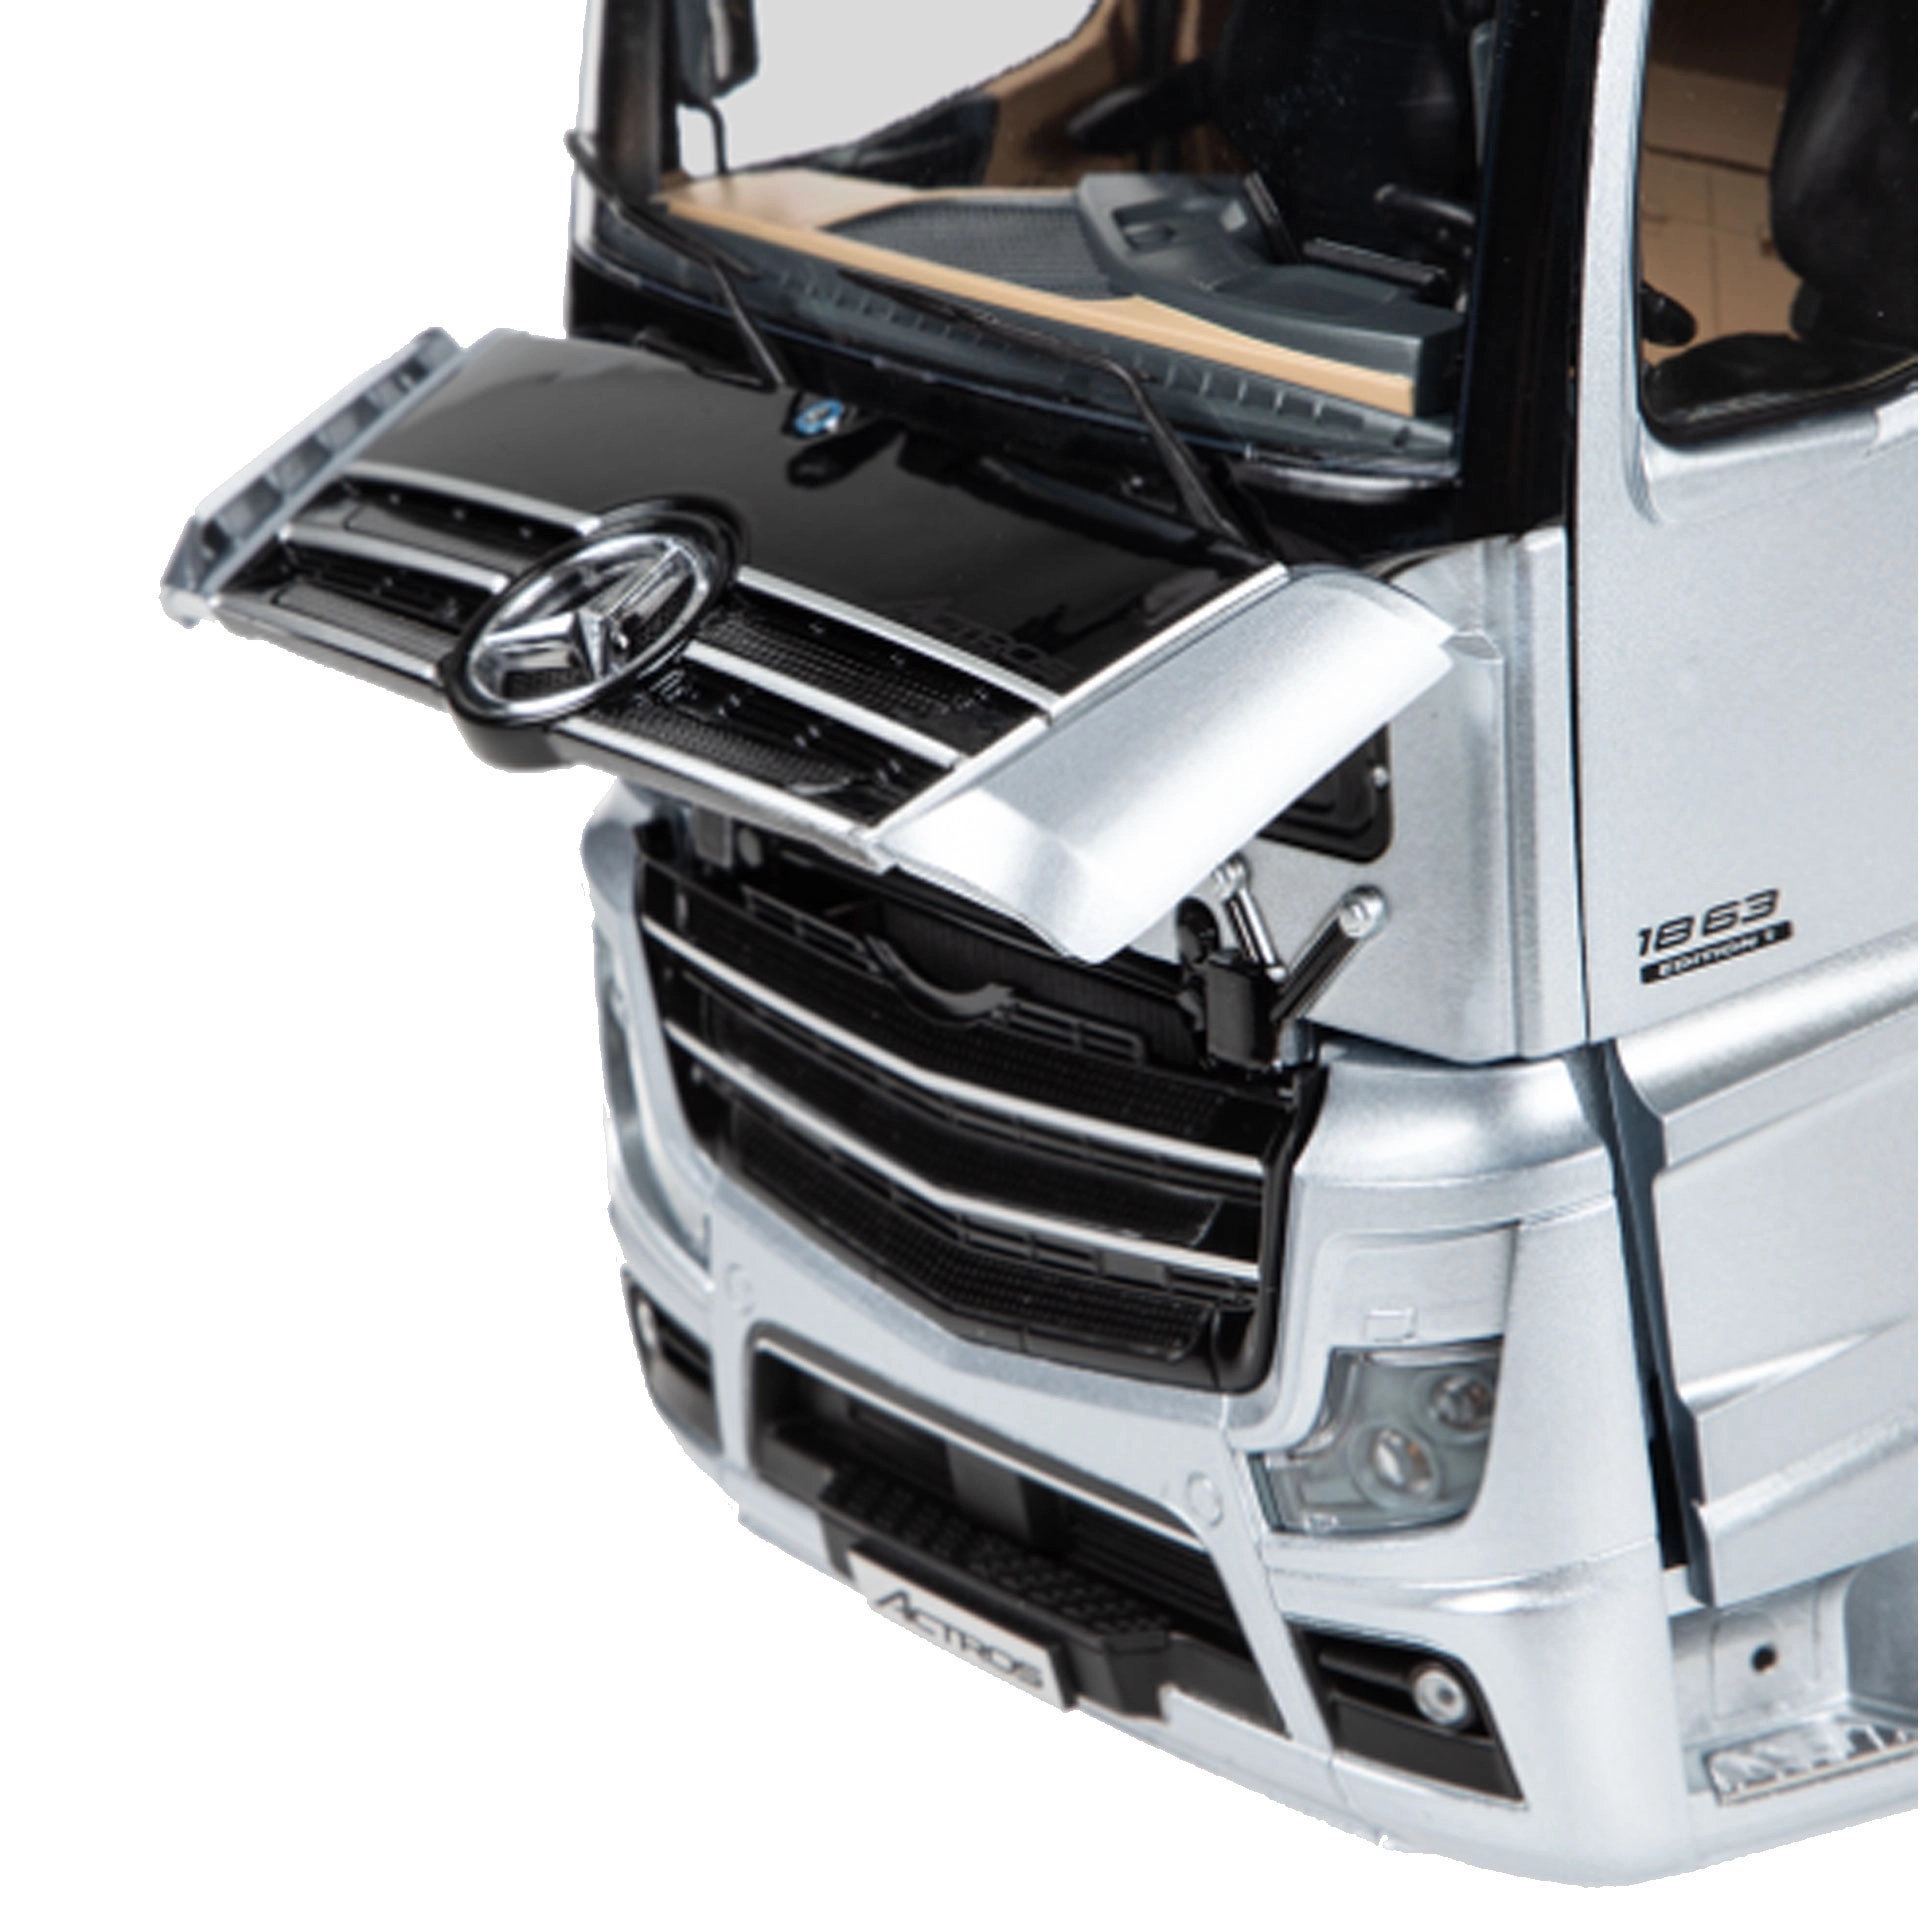 V66004211_mercedes-benz_trucks_modellauto_actros_autotransport_rosier-onlineshop3